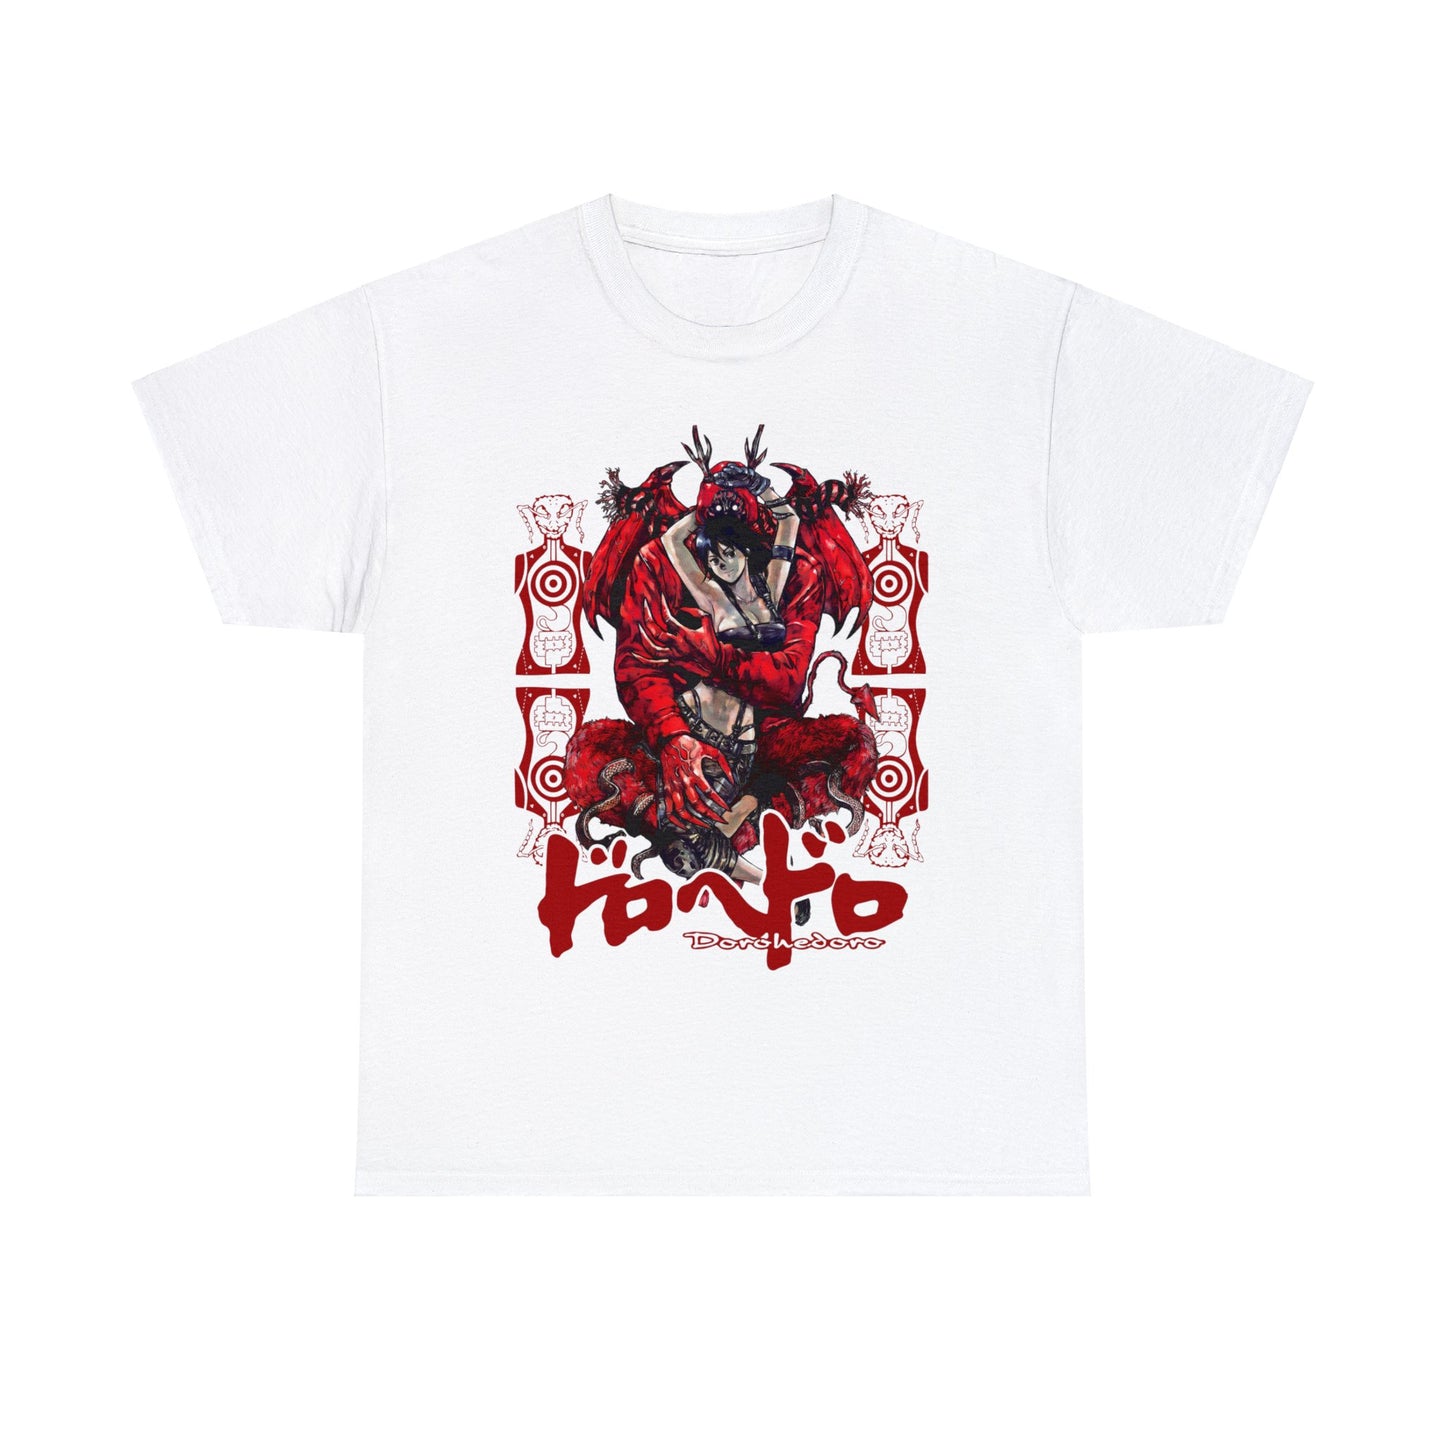 Dorohedoro - Nikaido T-Shirt